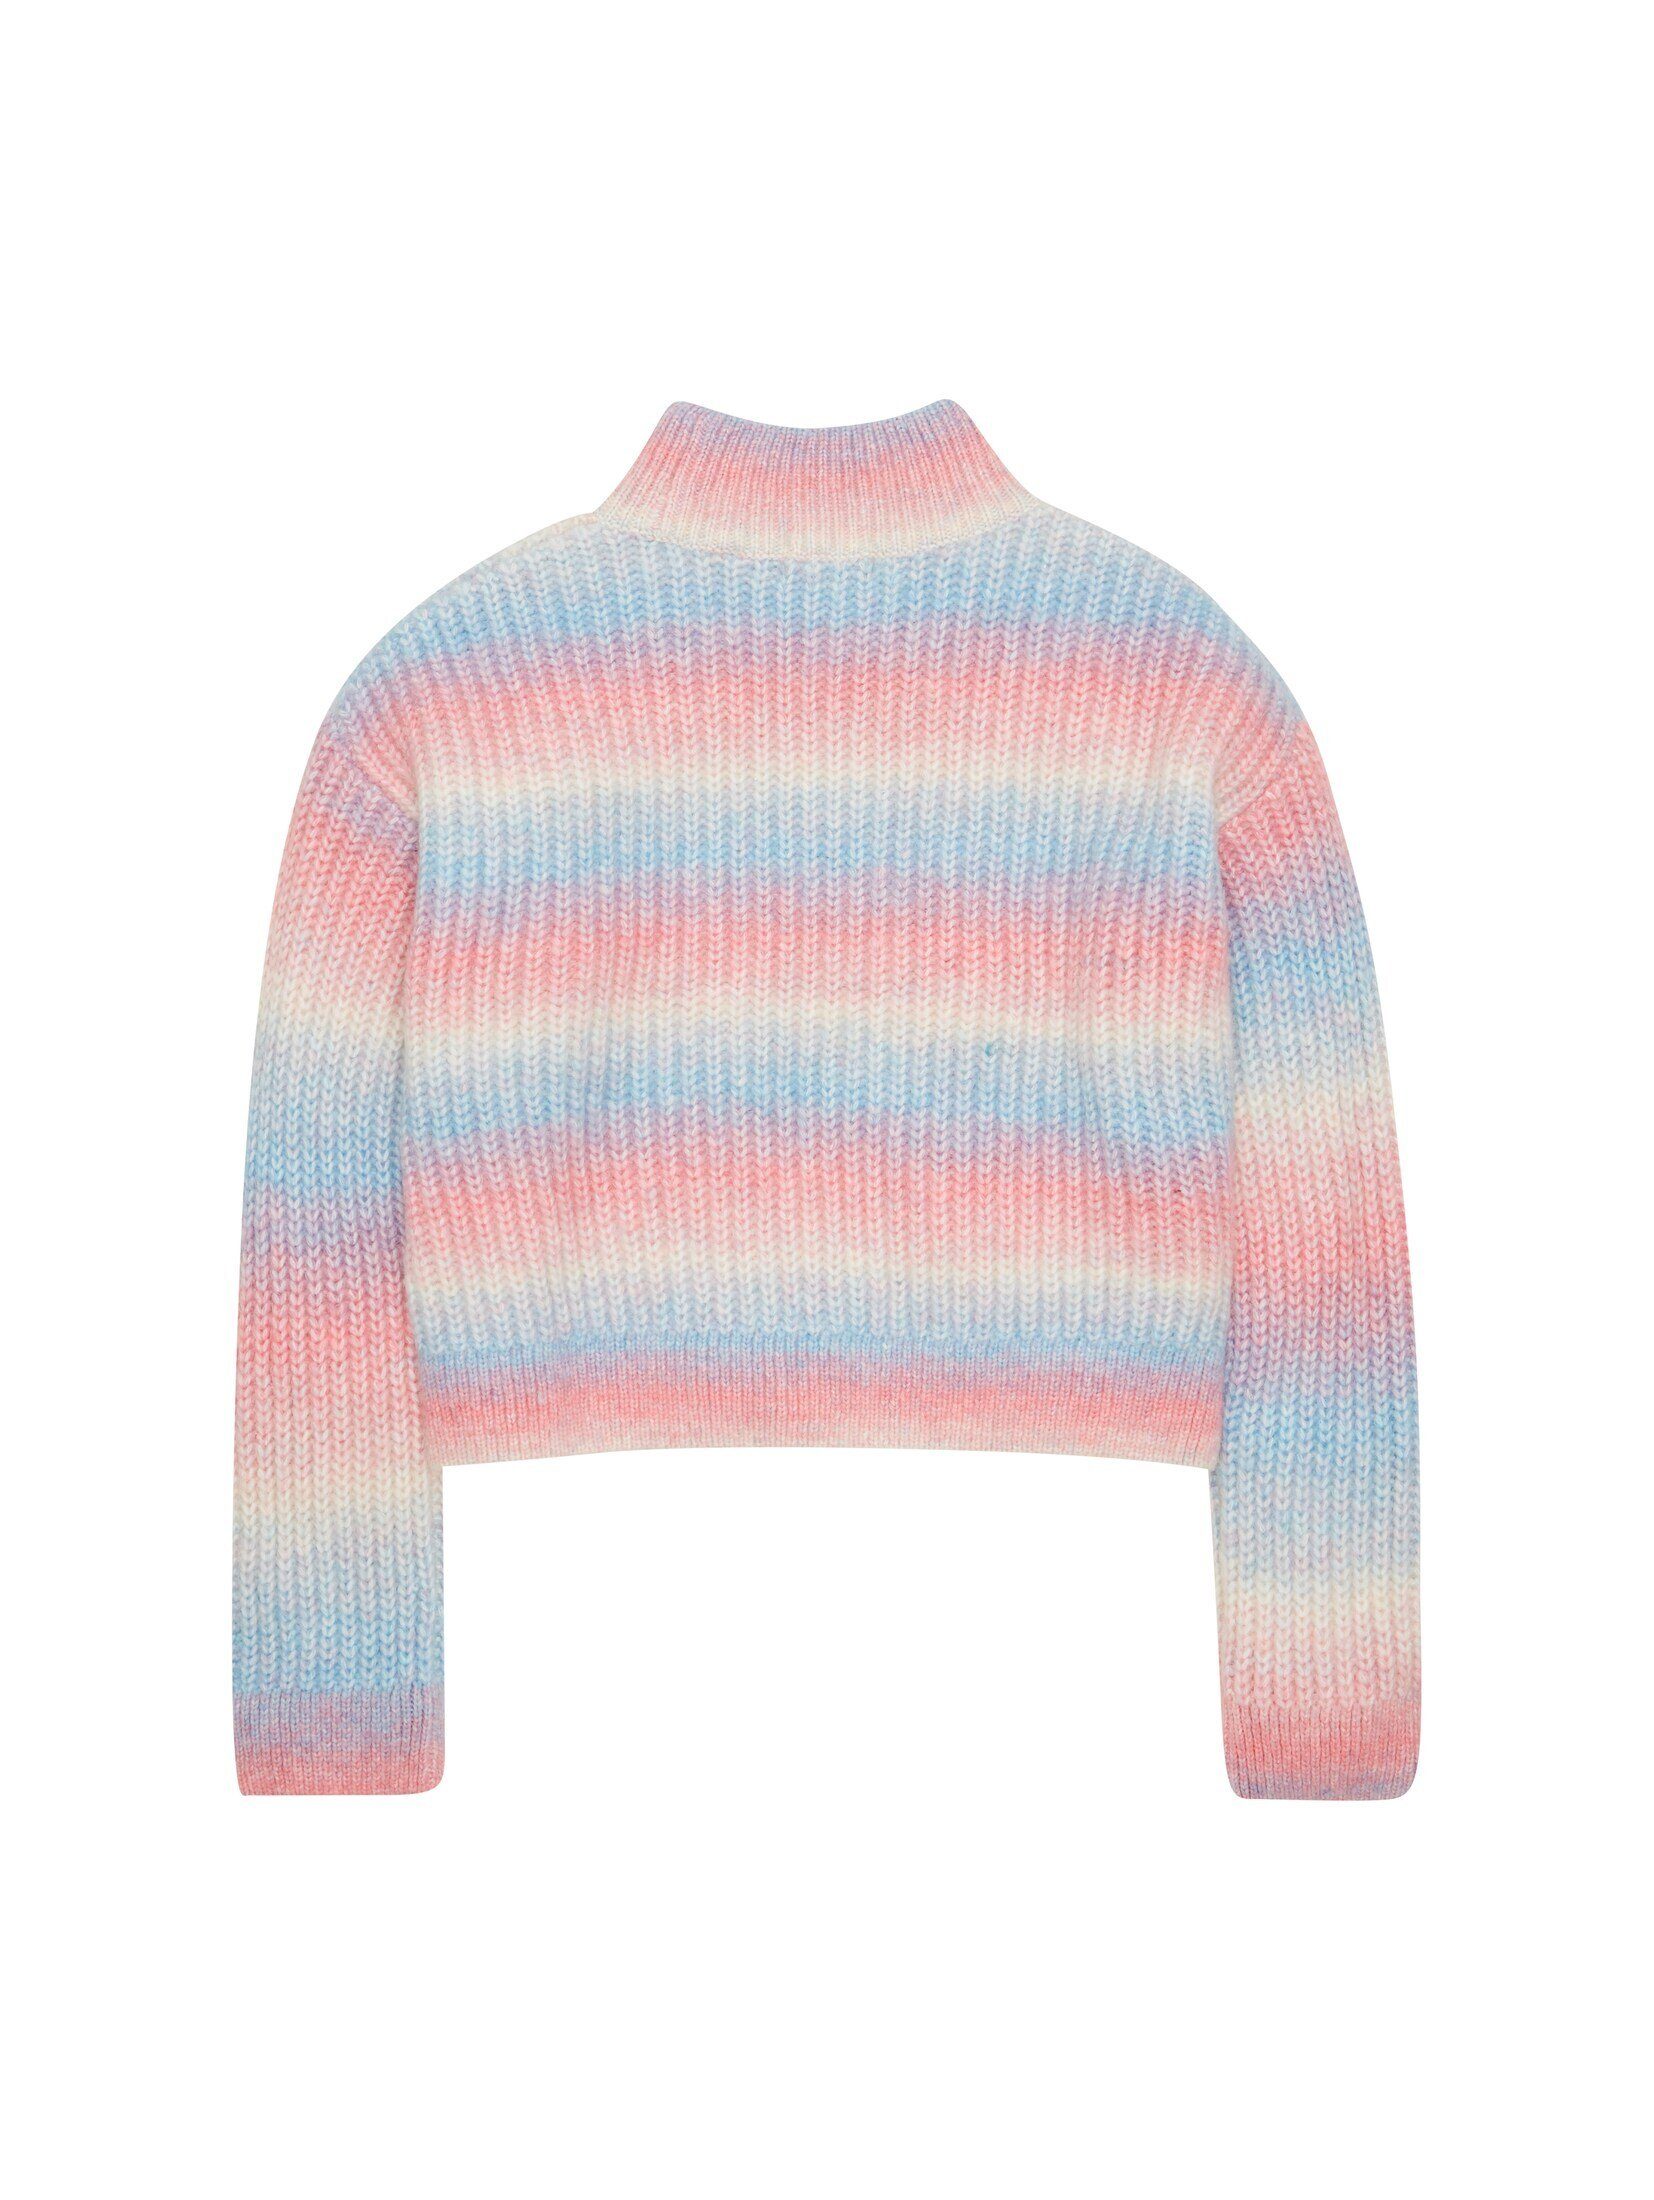 TOM TAILOR Strickpullover Cropped Pullover blue pink gradient design